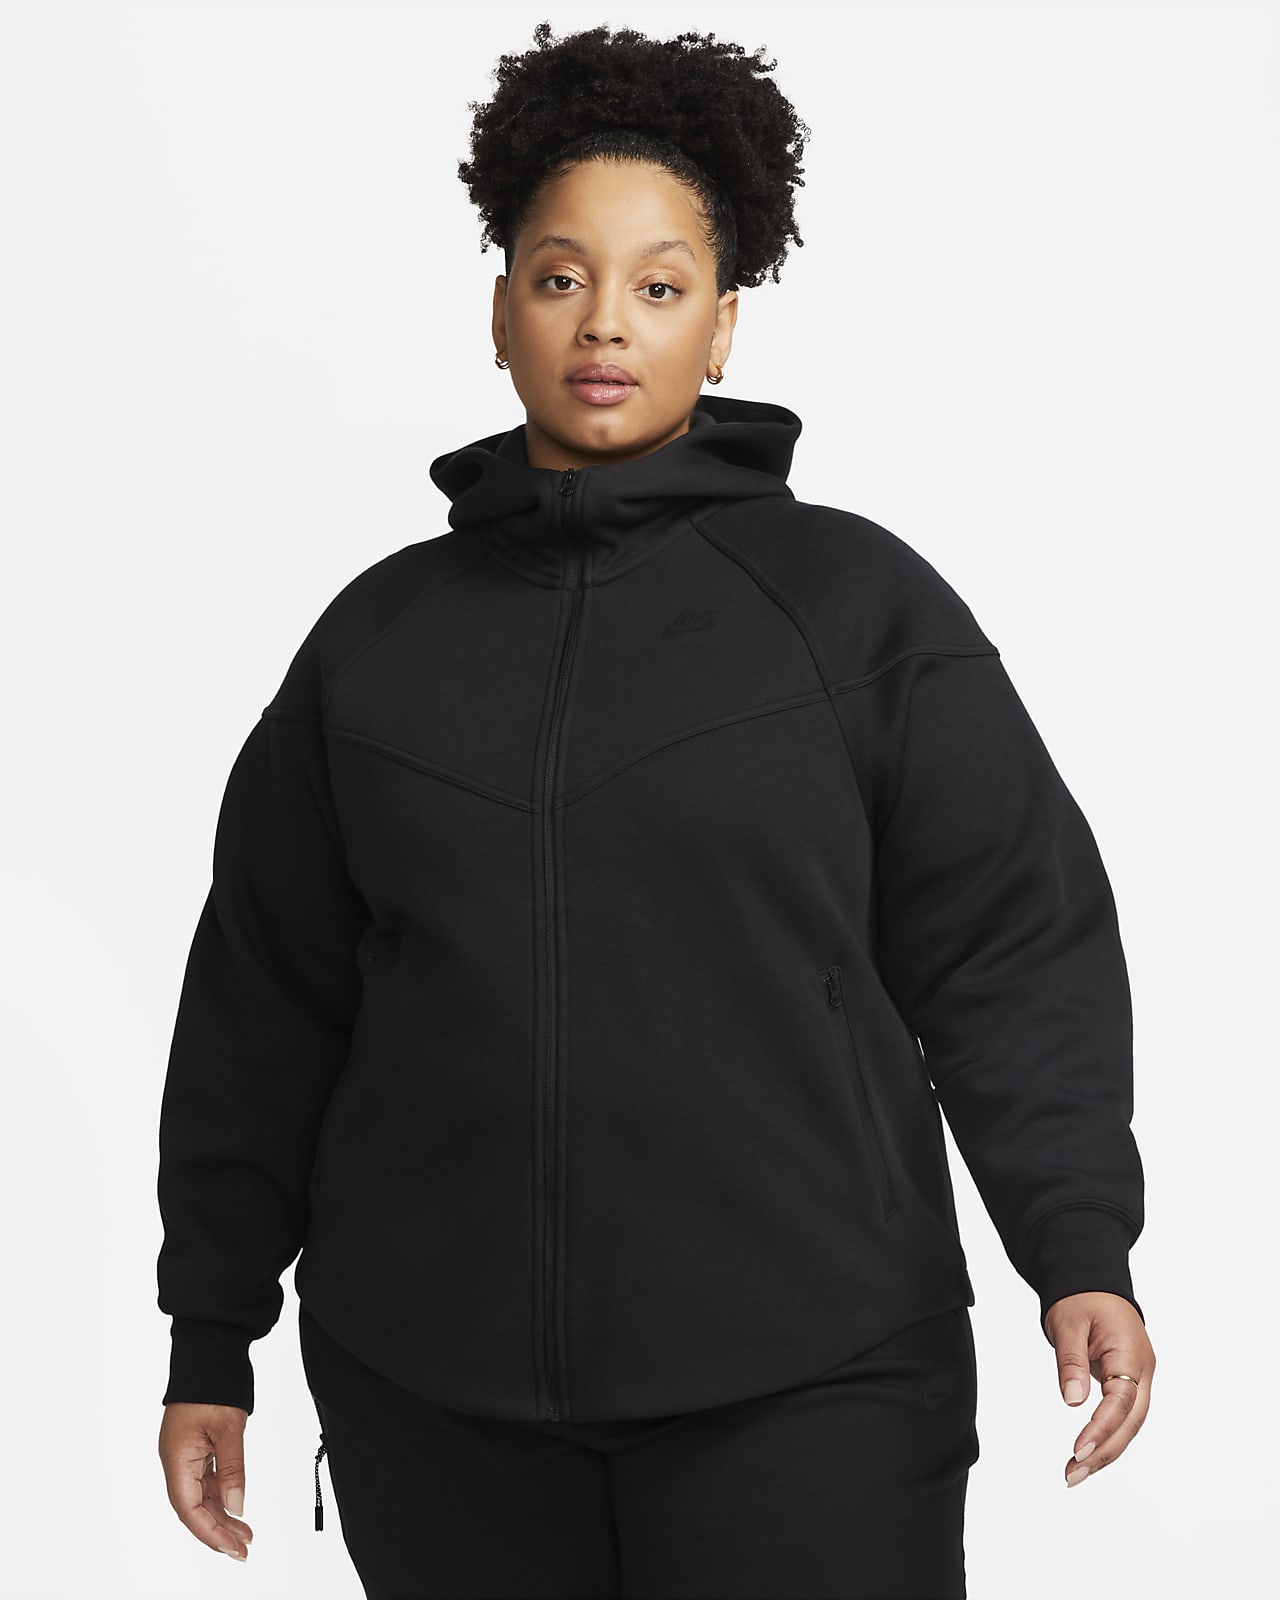 Sudadera con gorro de cierre completo para mujer talla grande Nike Sportswear Tech Fleece Windrunner